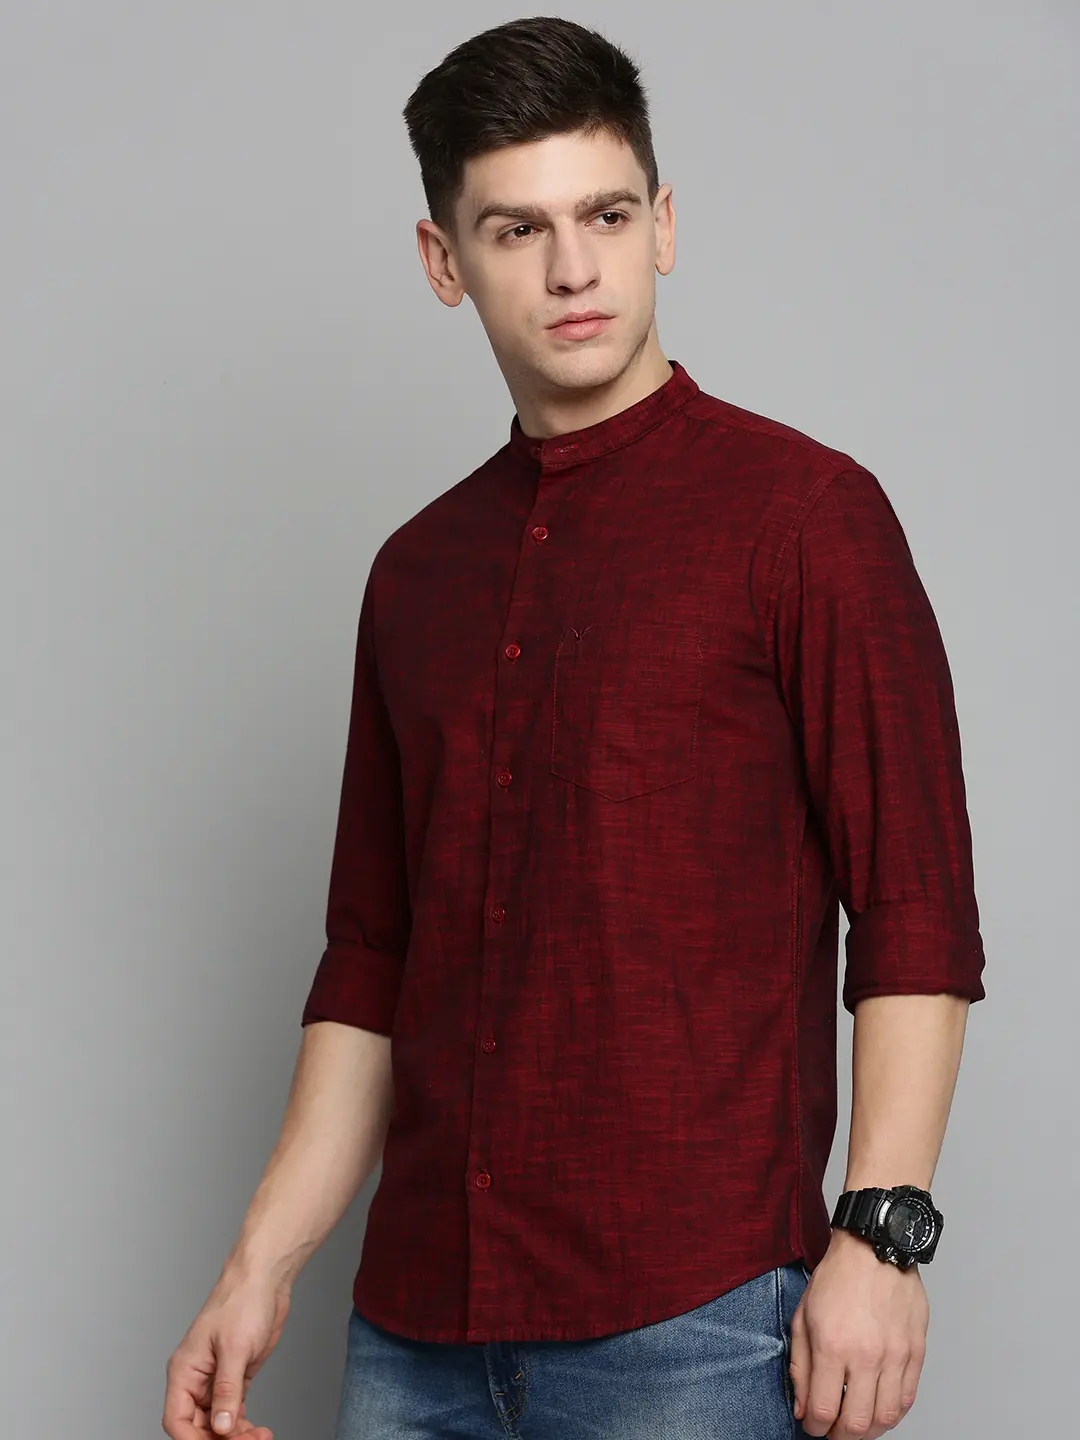 SHOWOFF Men's Mandarin Collar Burgundy Solid Shirt